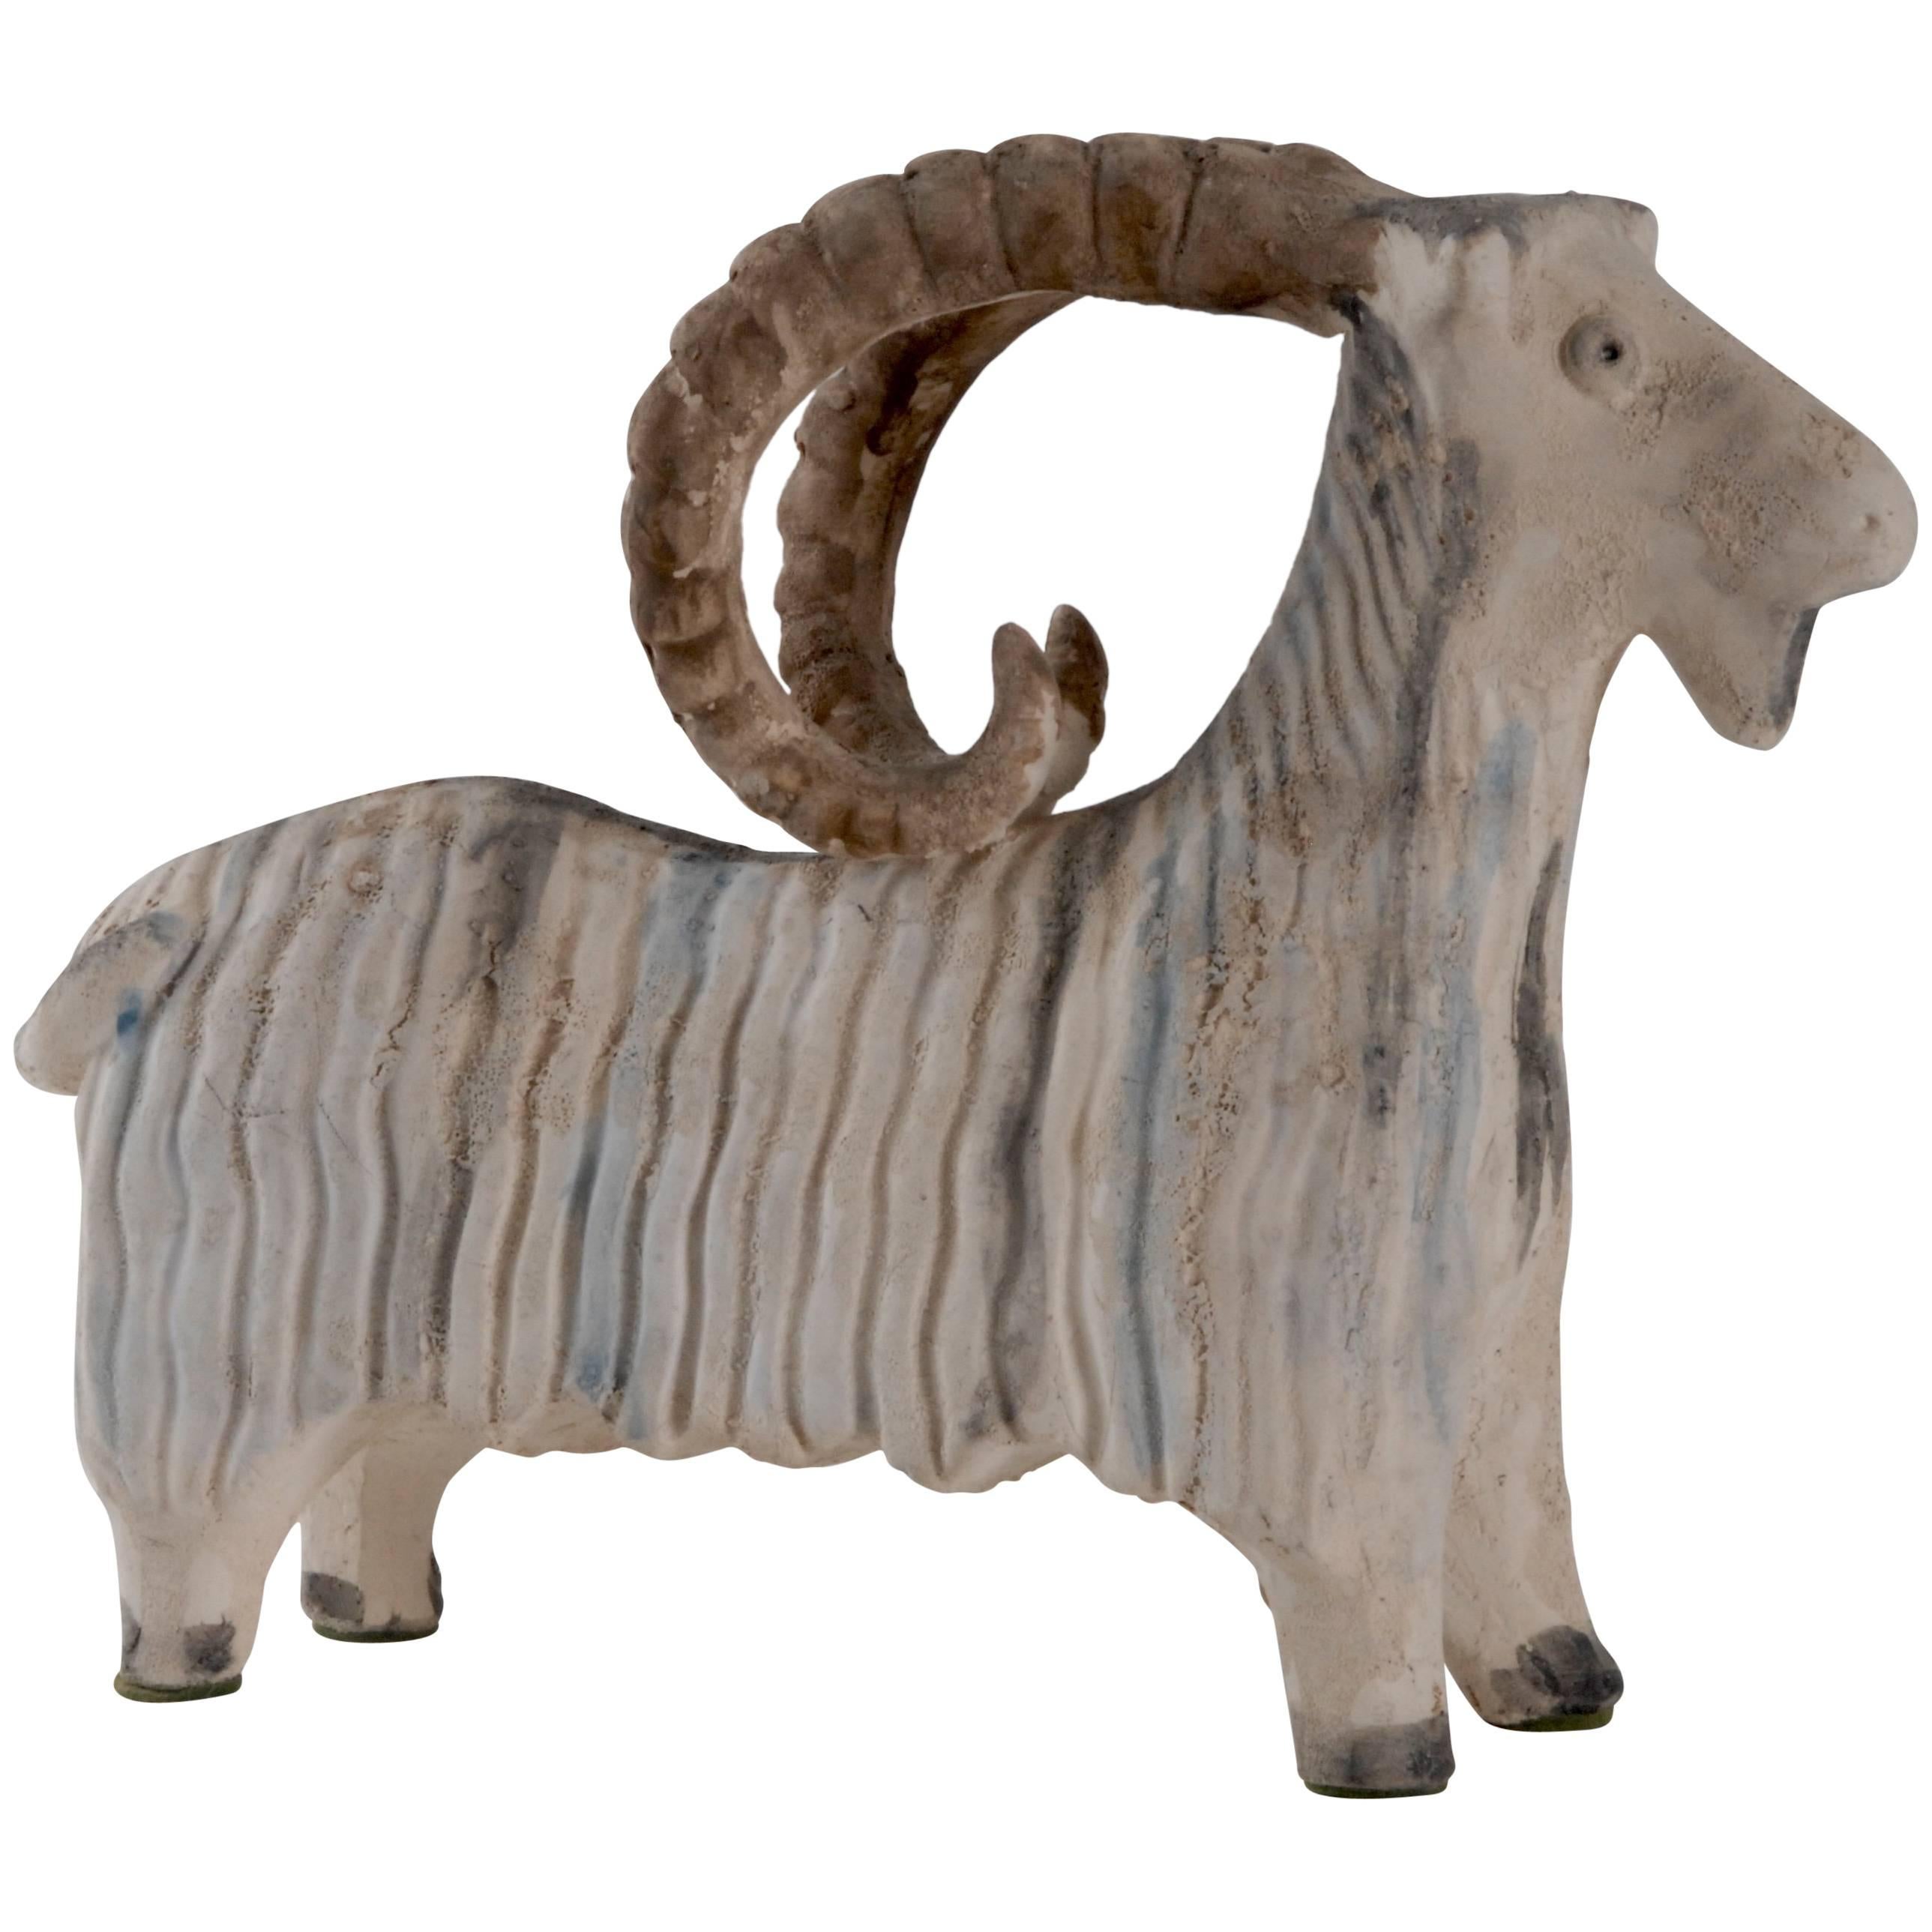 Bitossi Aldo Londi Italy Goat or Ram, circa 1960